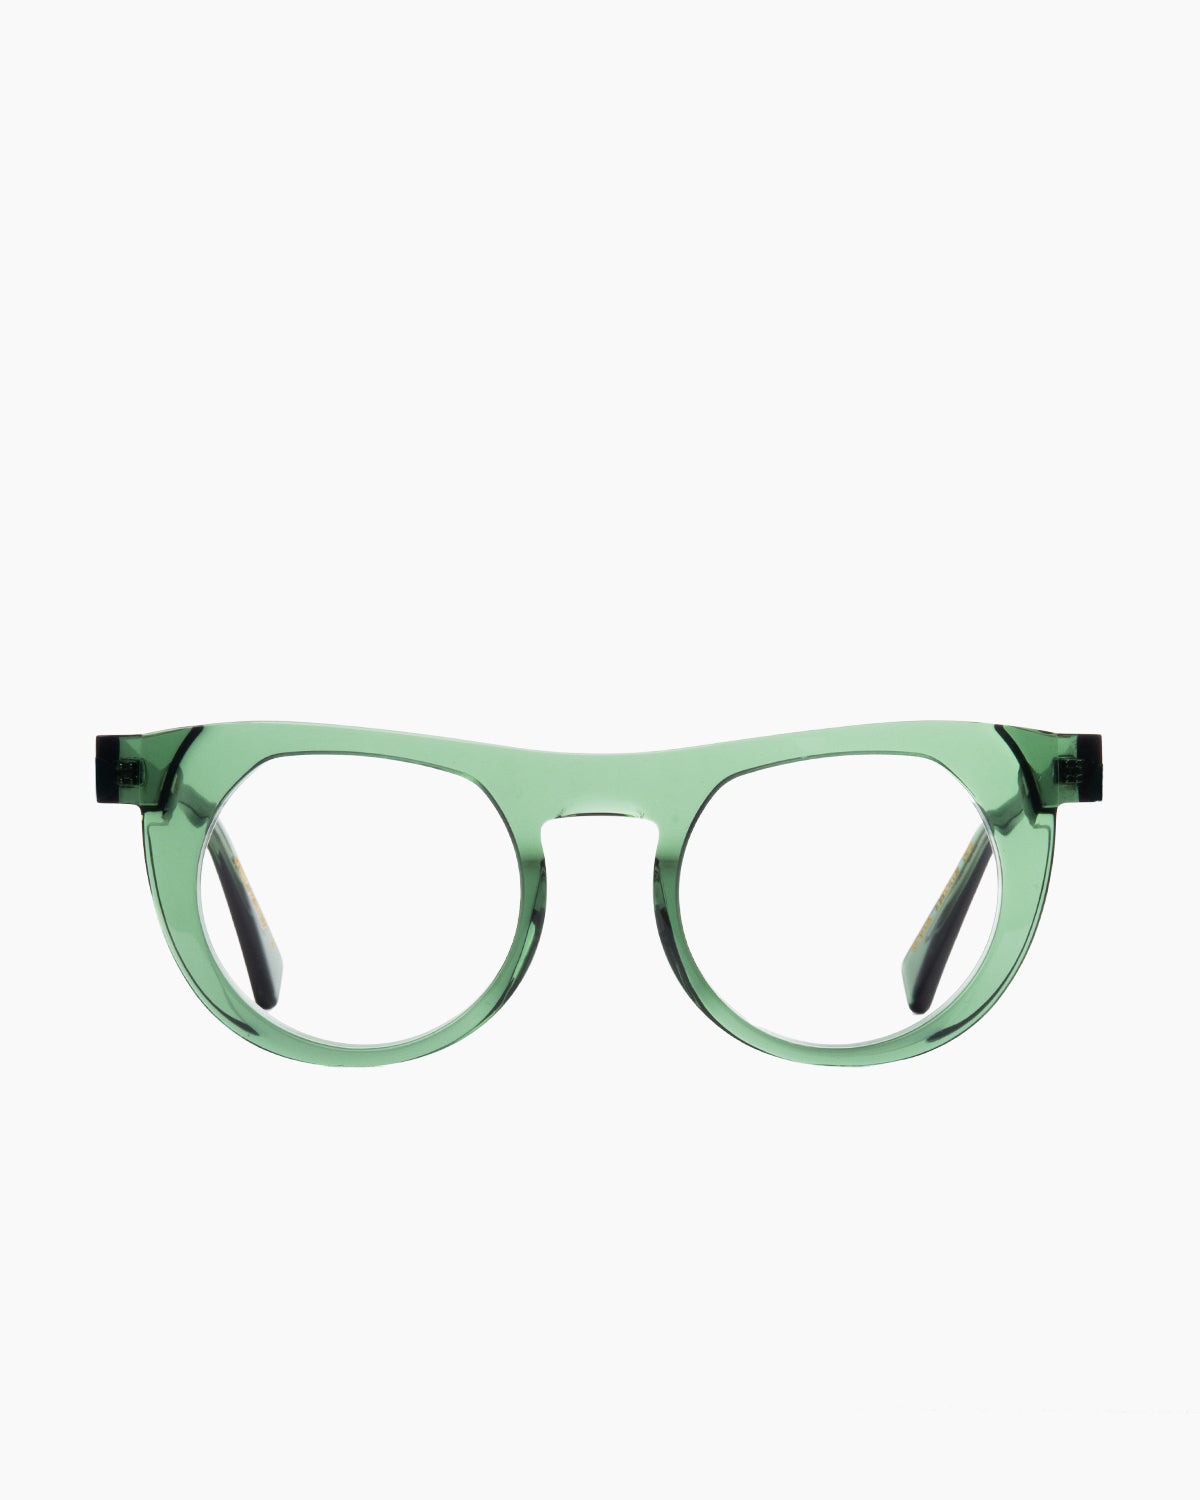 Gamine - Boavista kids - cyrstal/green | Bar à lunettes:  Marie-Sophie Dion